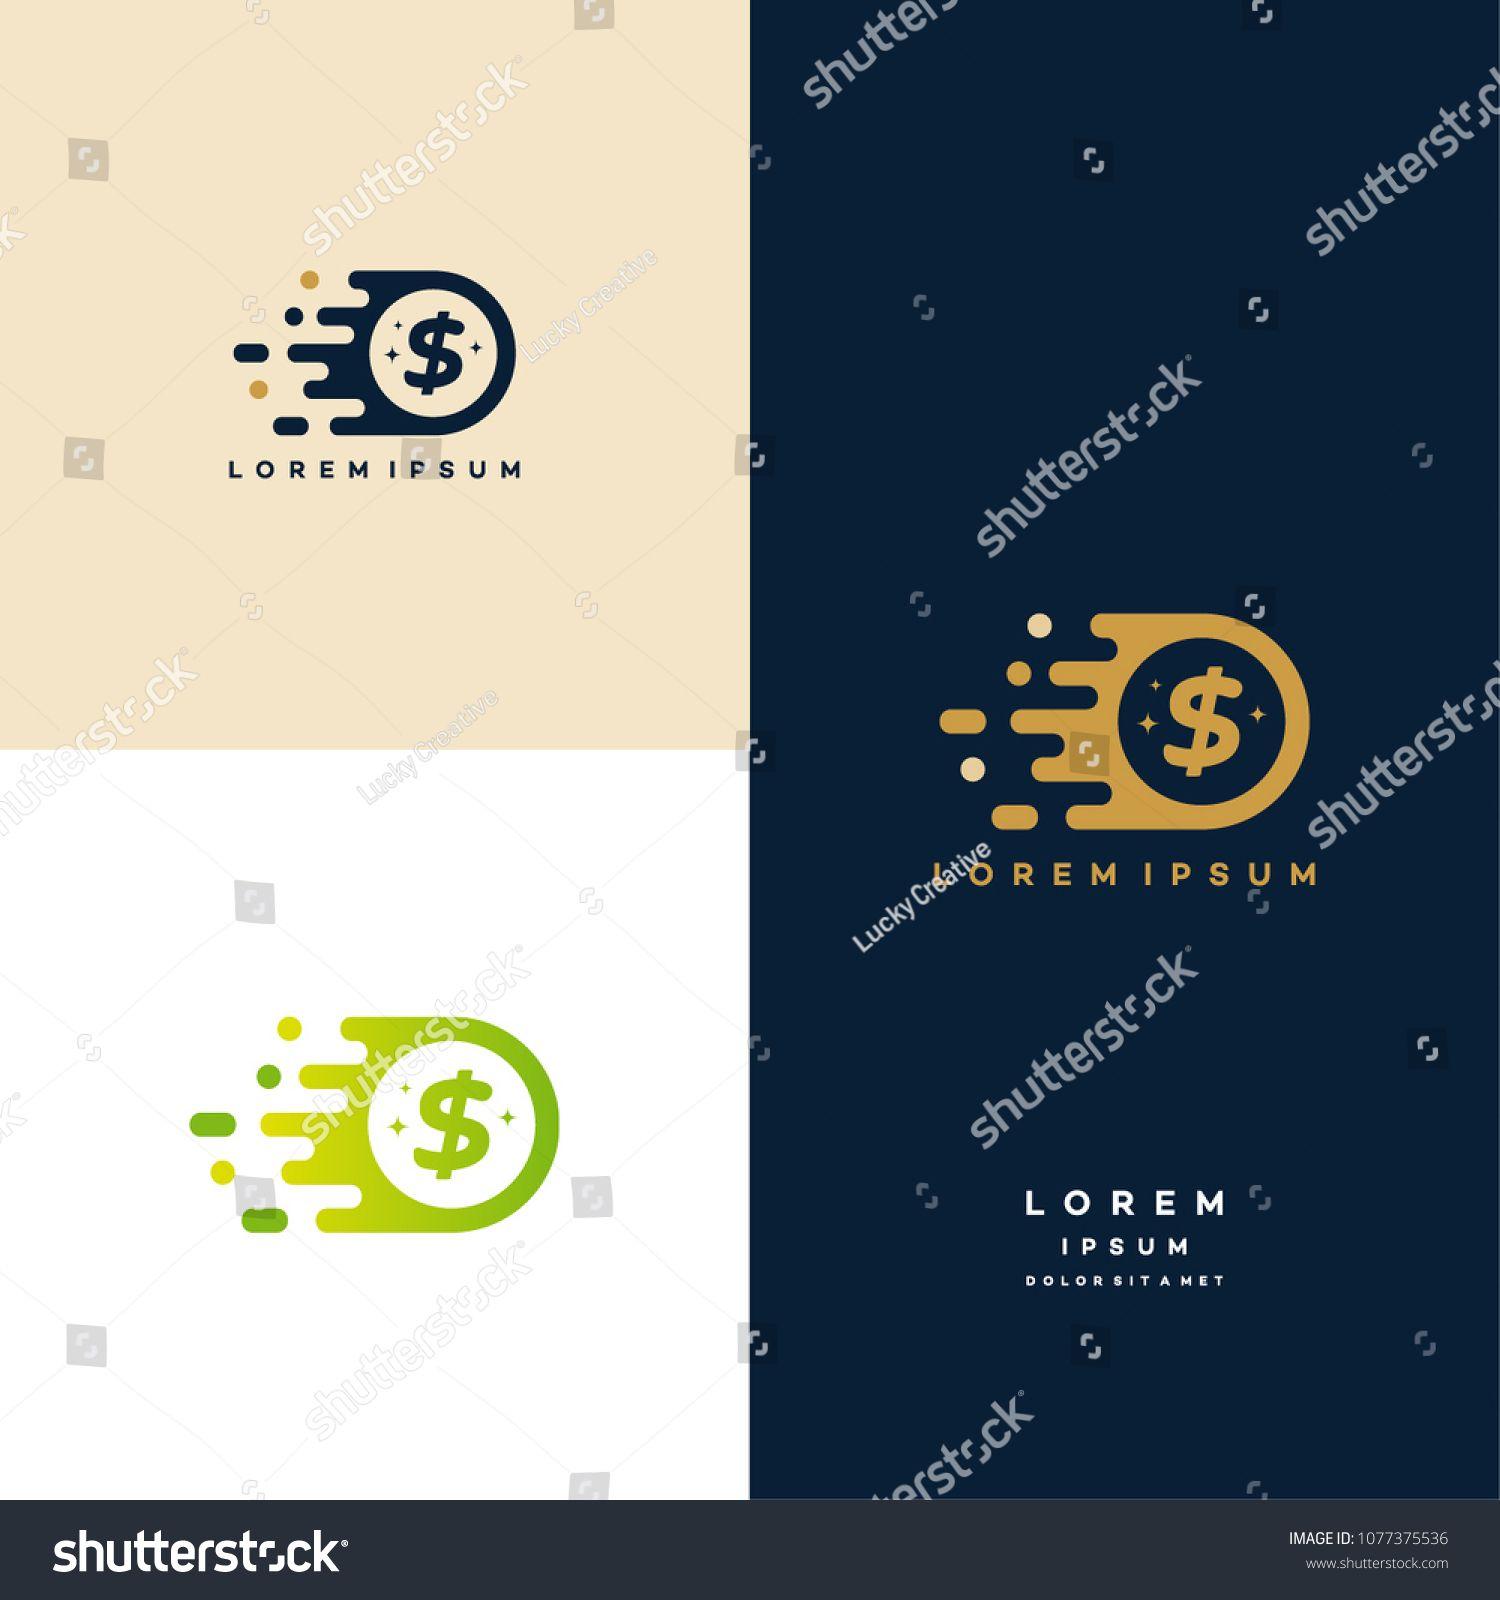 Fast Cash Logo - Fast Coin Logo designs concept vector, Fast Cash logo template